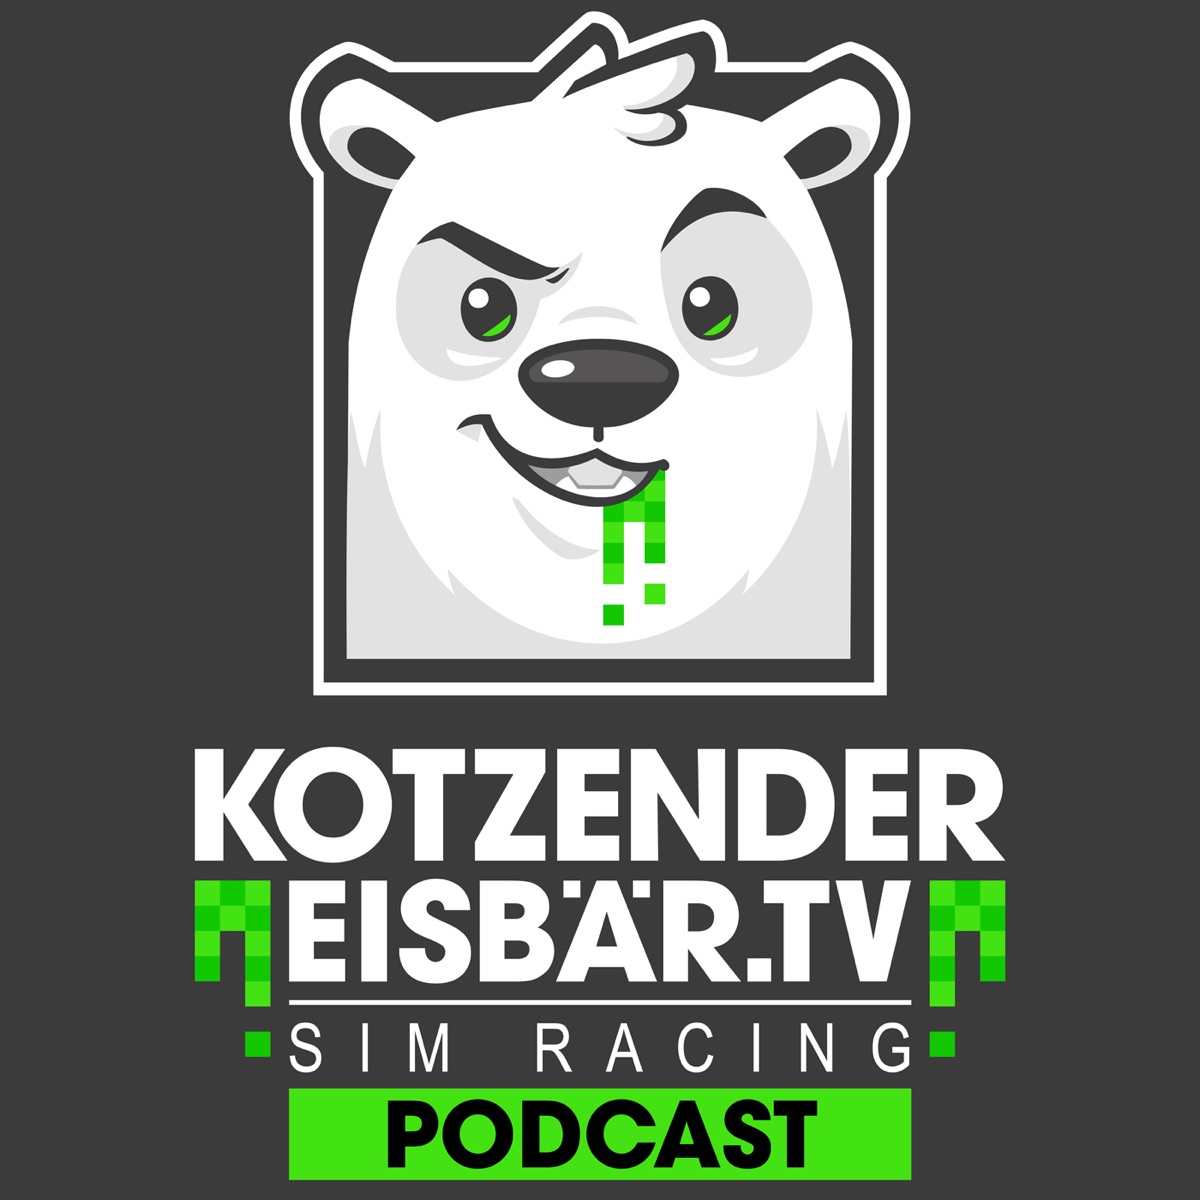 KBTV Sim Racing Podcast – Podcast – Podtail